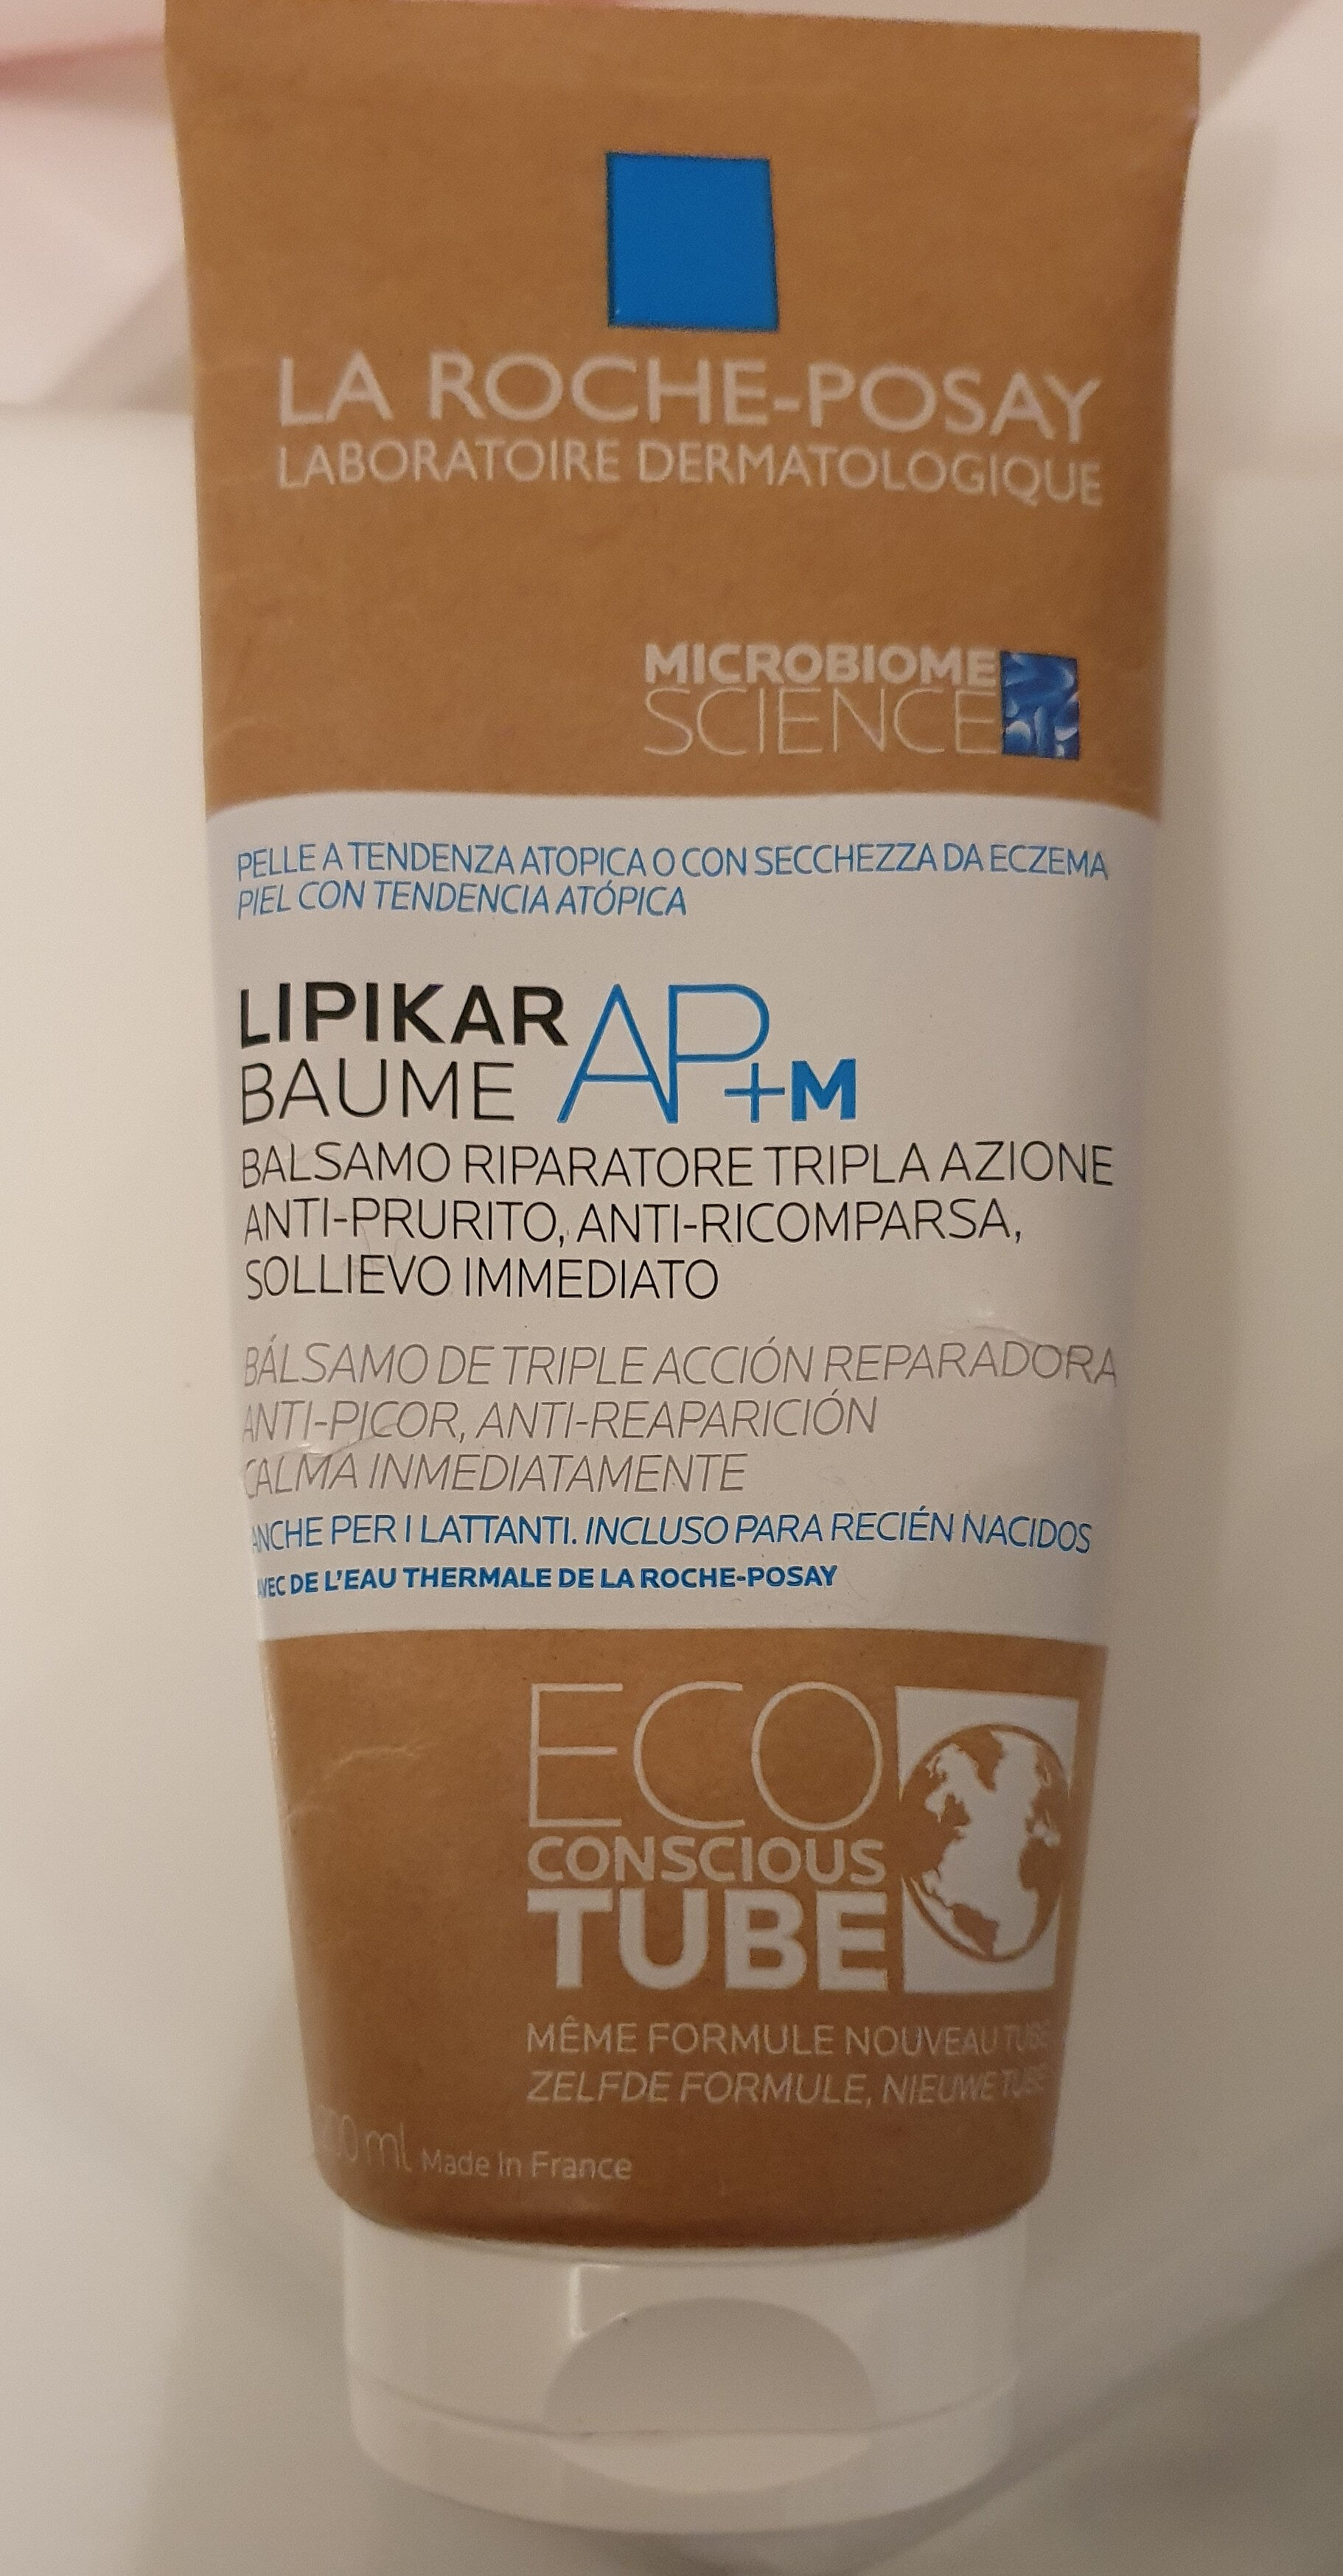 LIPIKAR BAUME AP+M - Produkt - it